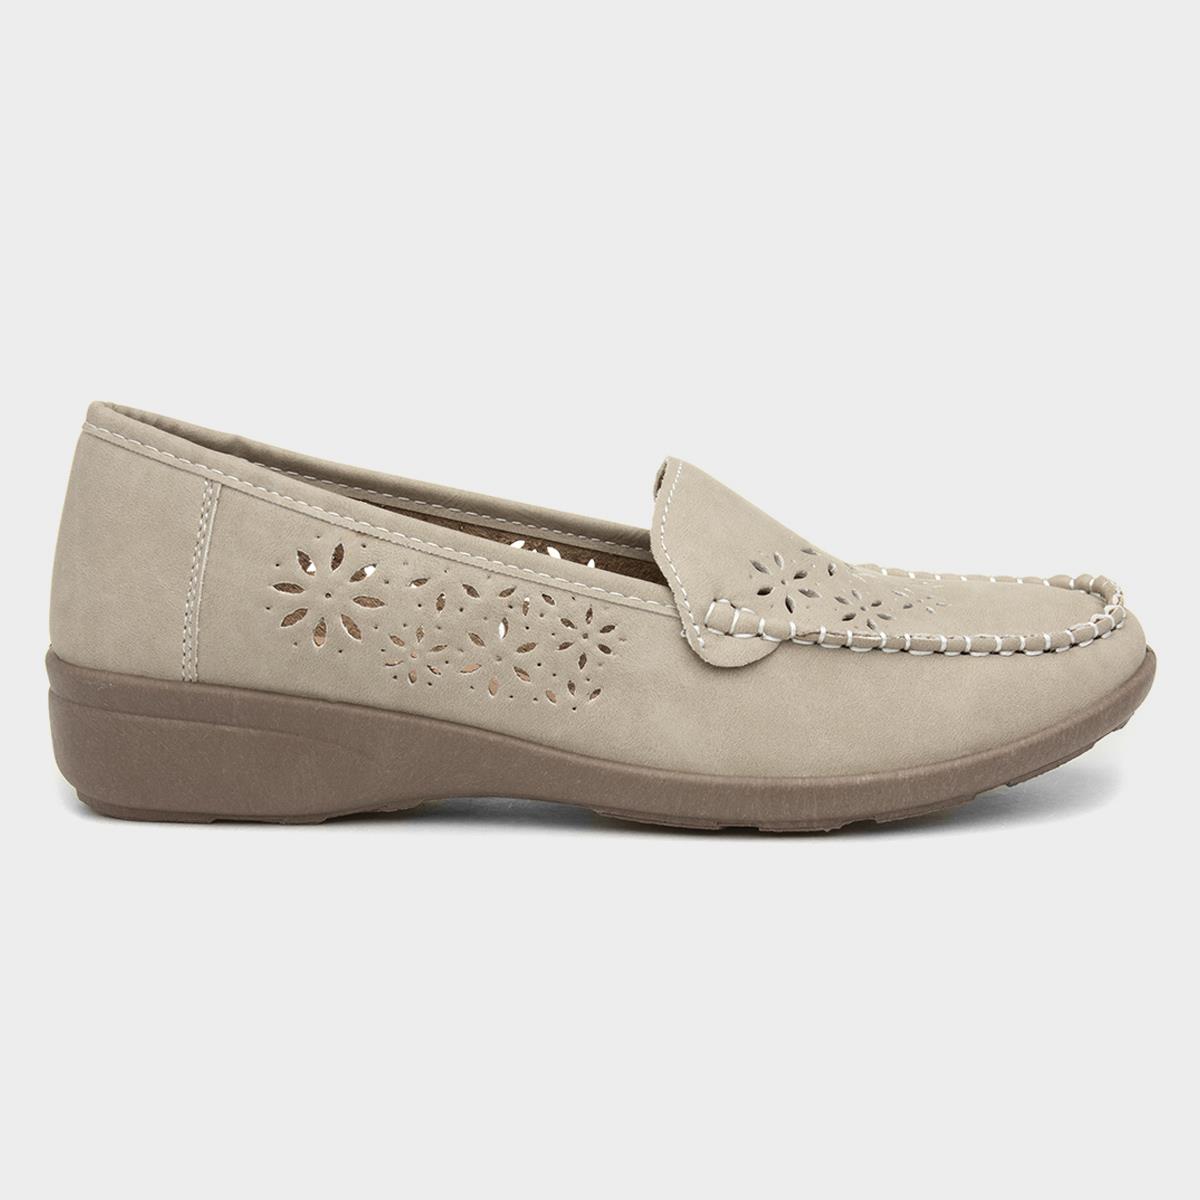 Softlites Womens Beige Casual Loafer Shoe SOFT-LITES 